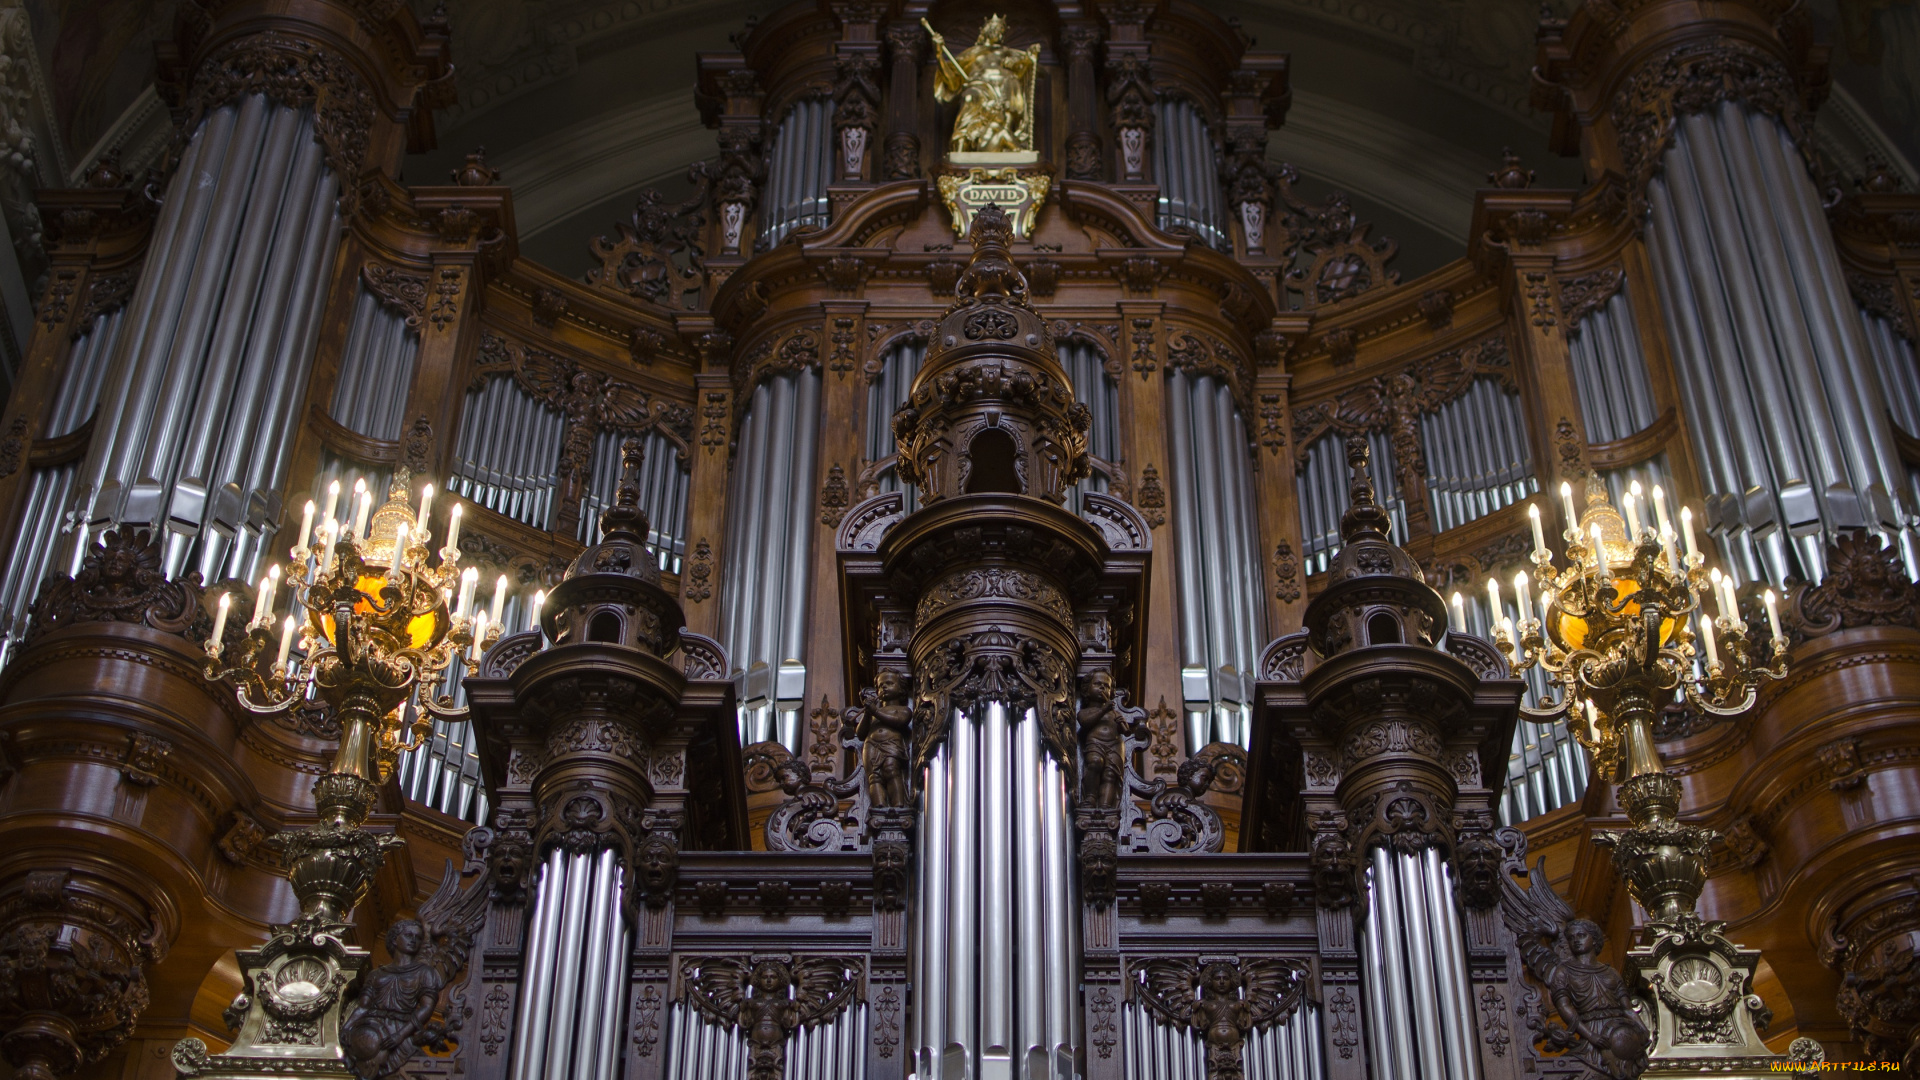 the, organ, музыка, музыкальные, инструменты, орган